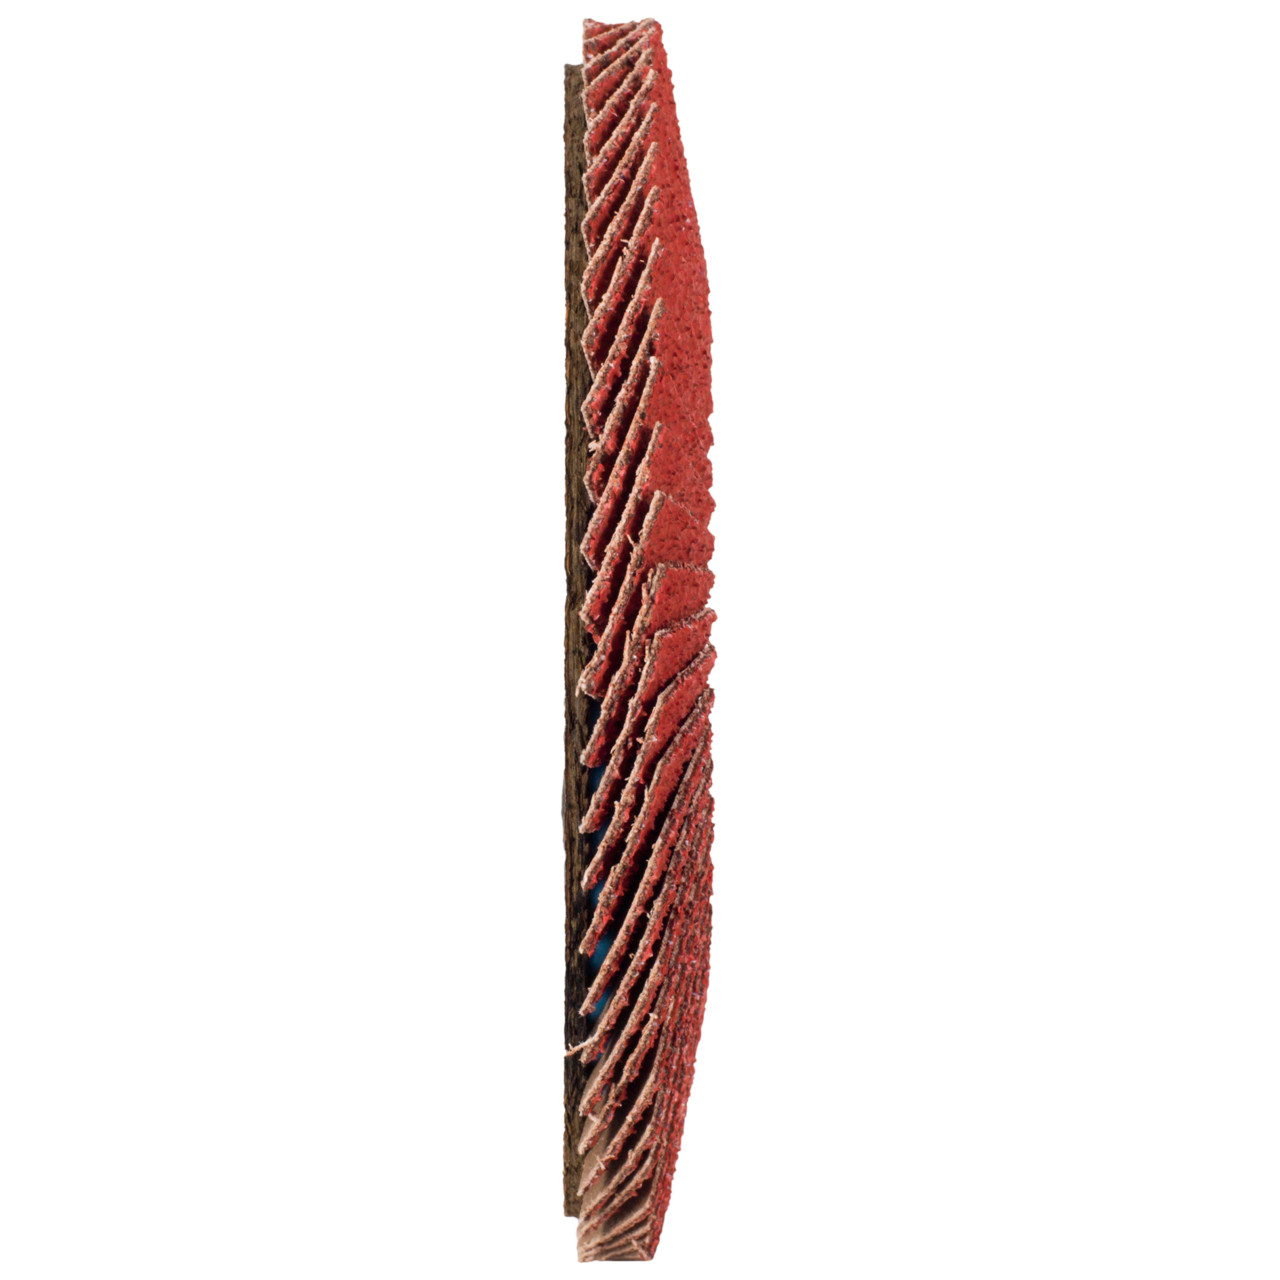 Tyrolit Gekartelde borgring DxH 178x22,23 CERABOND gekartelde borgring voor roestvrij staal, P60, vorm: 27A - geslingerde versie (glasvezeldragerhuisversie), Art. 34166167